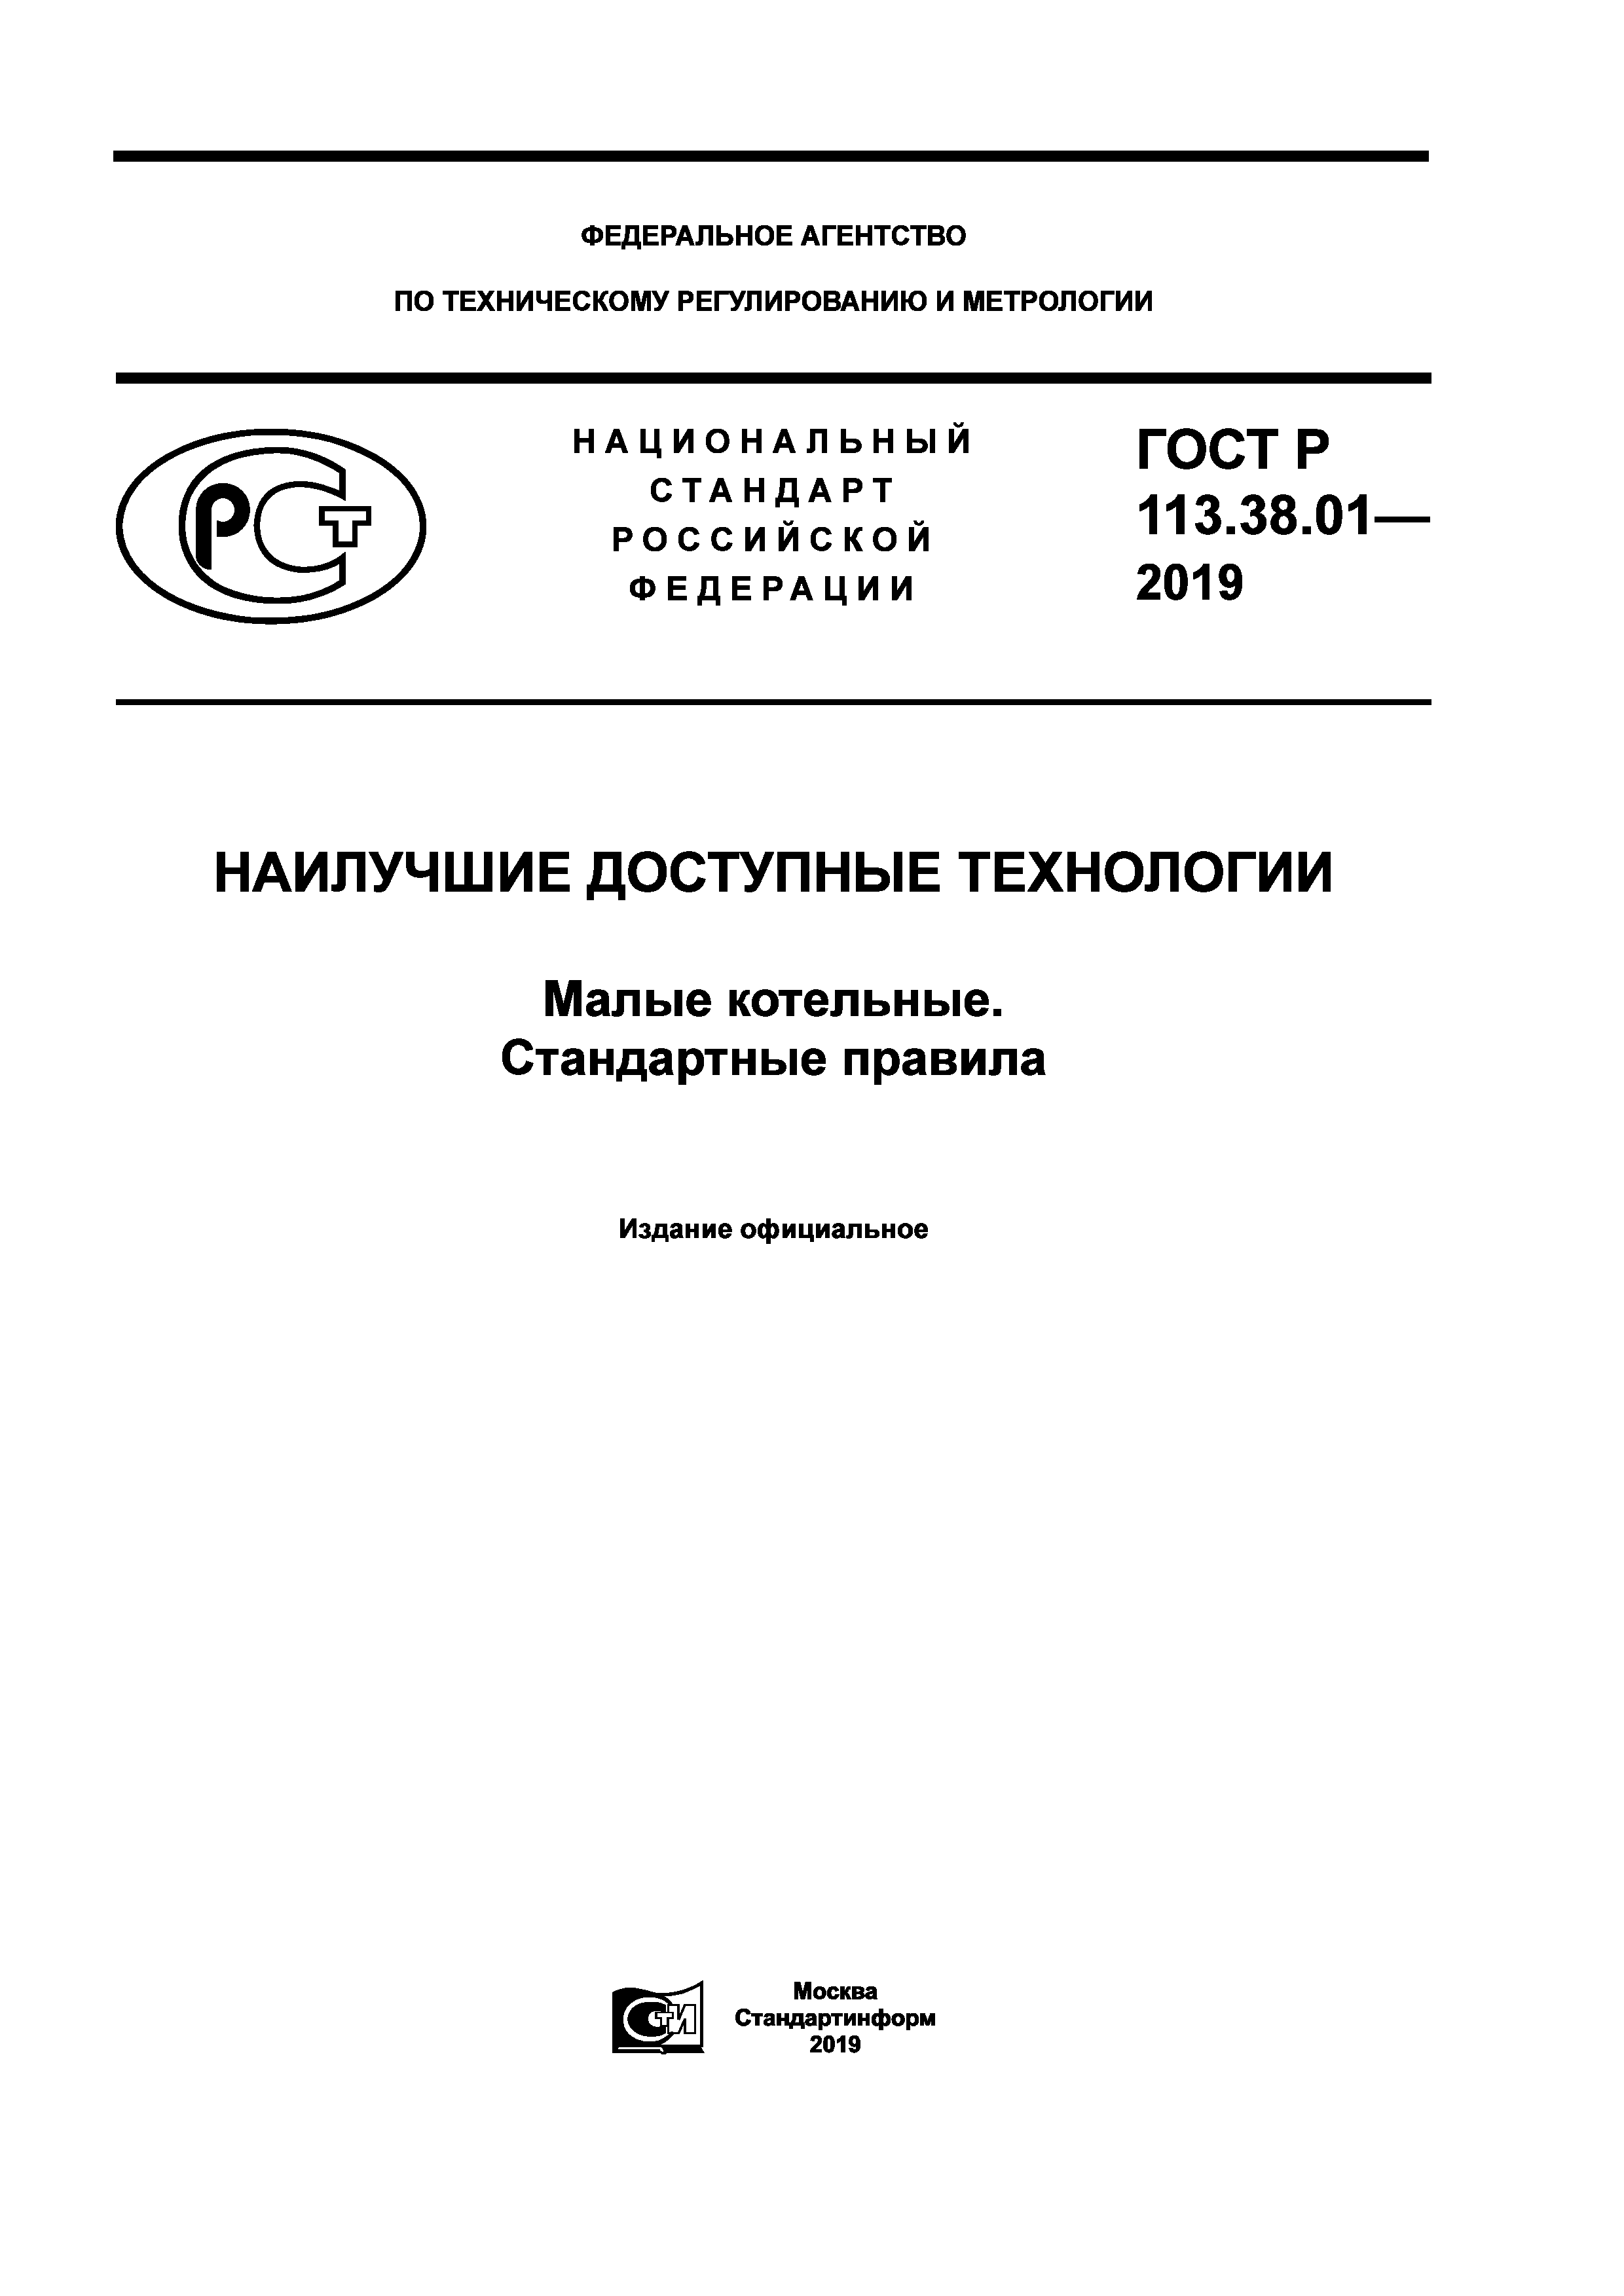 ГОСТ Р 113.38.01-2019